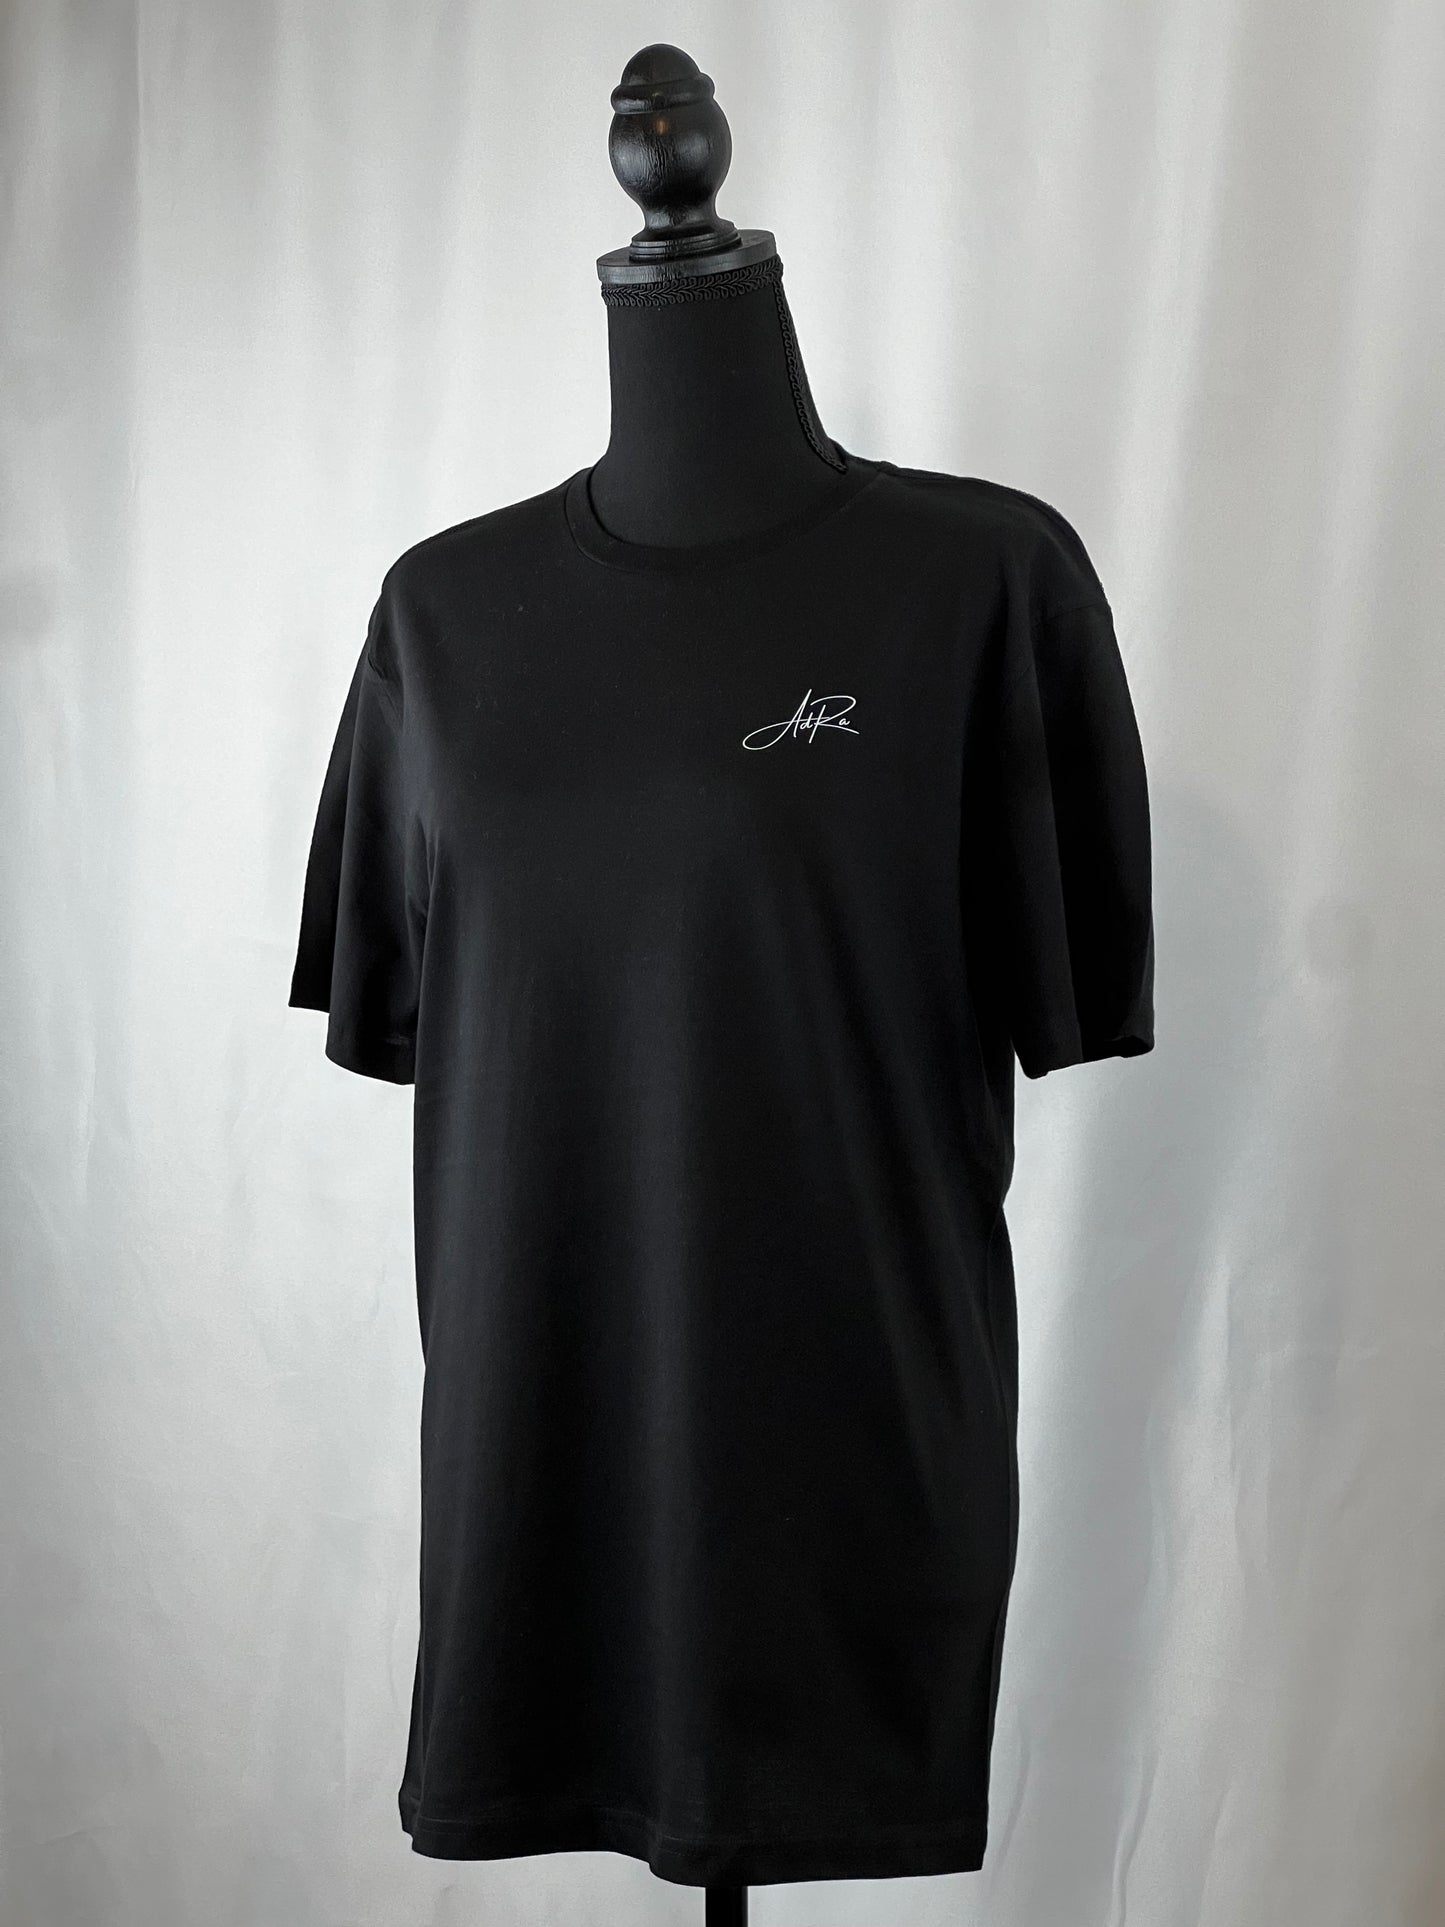 Adra Unisex T-Shirt | Adra Apparel